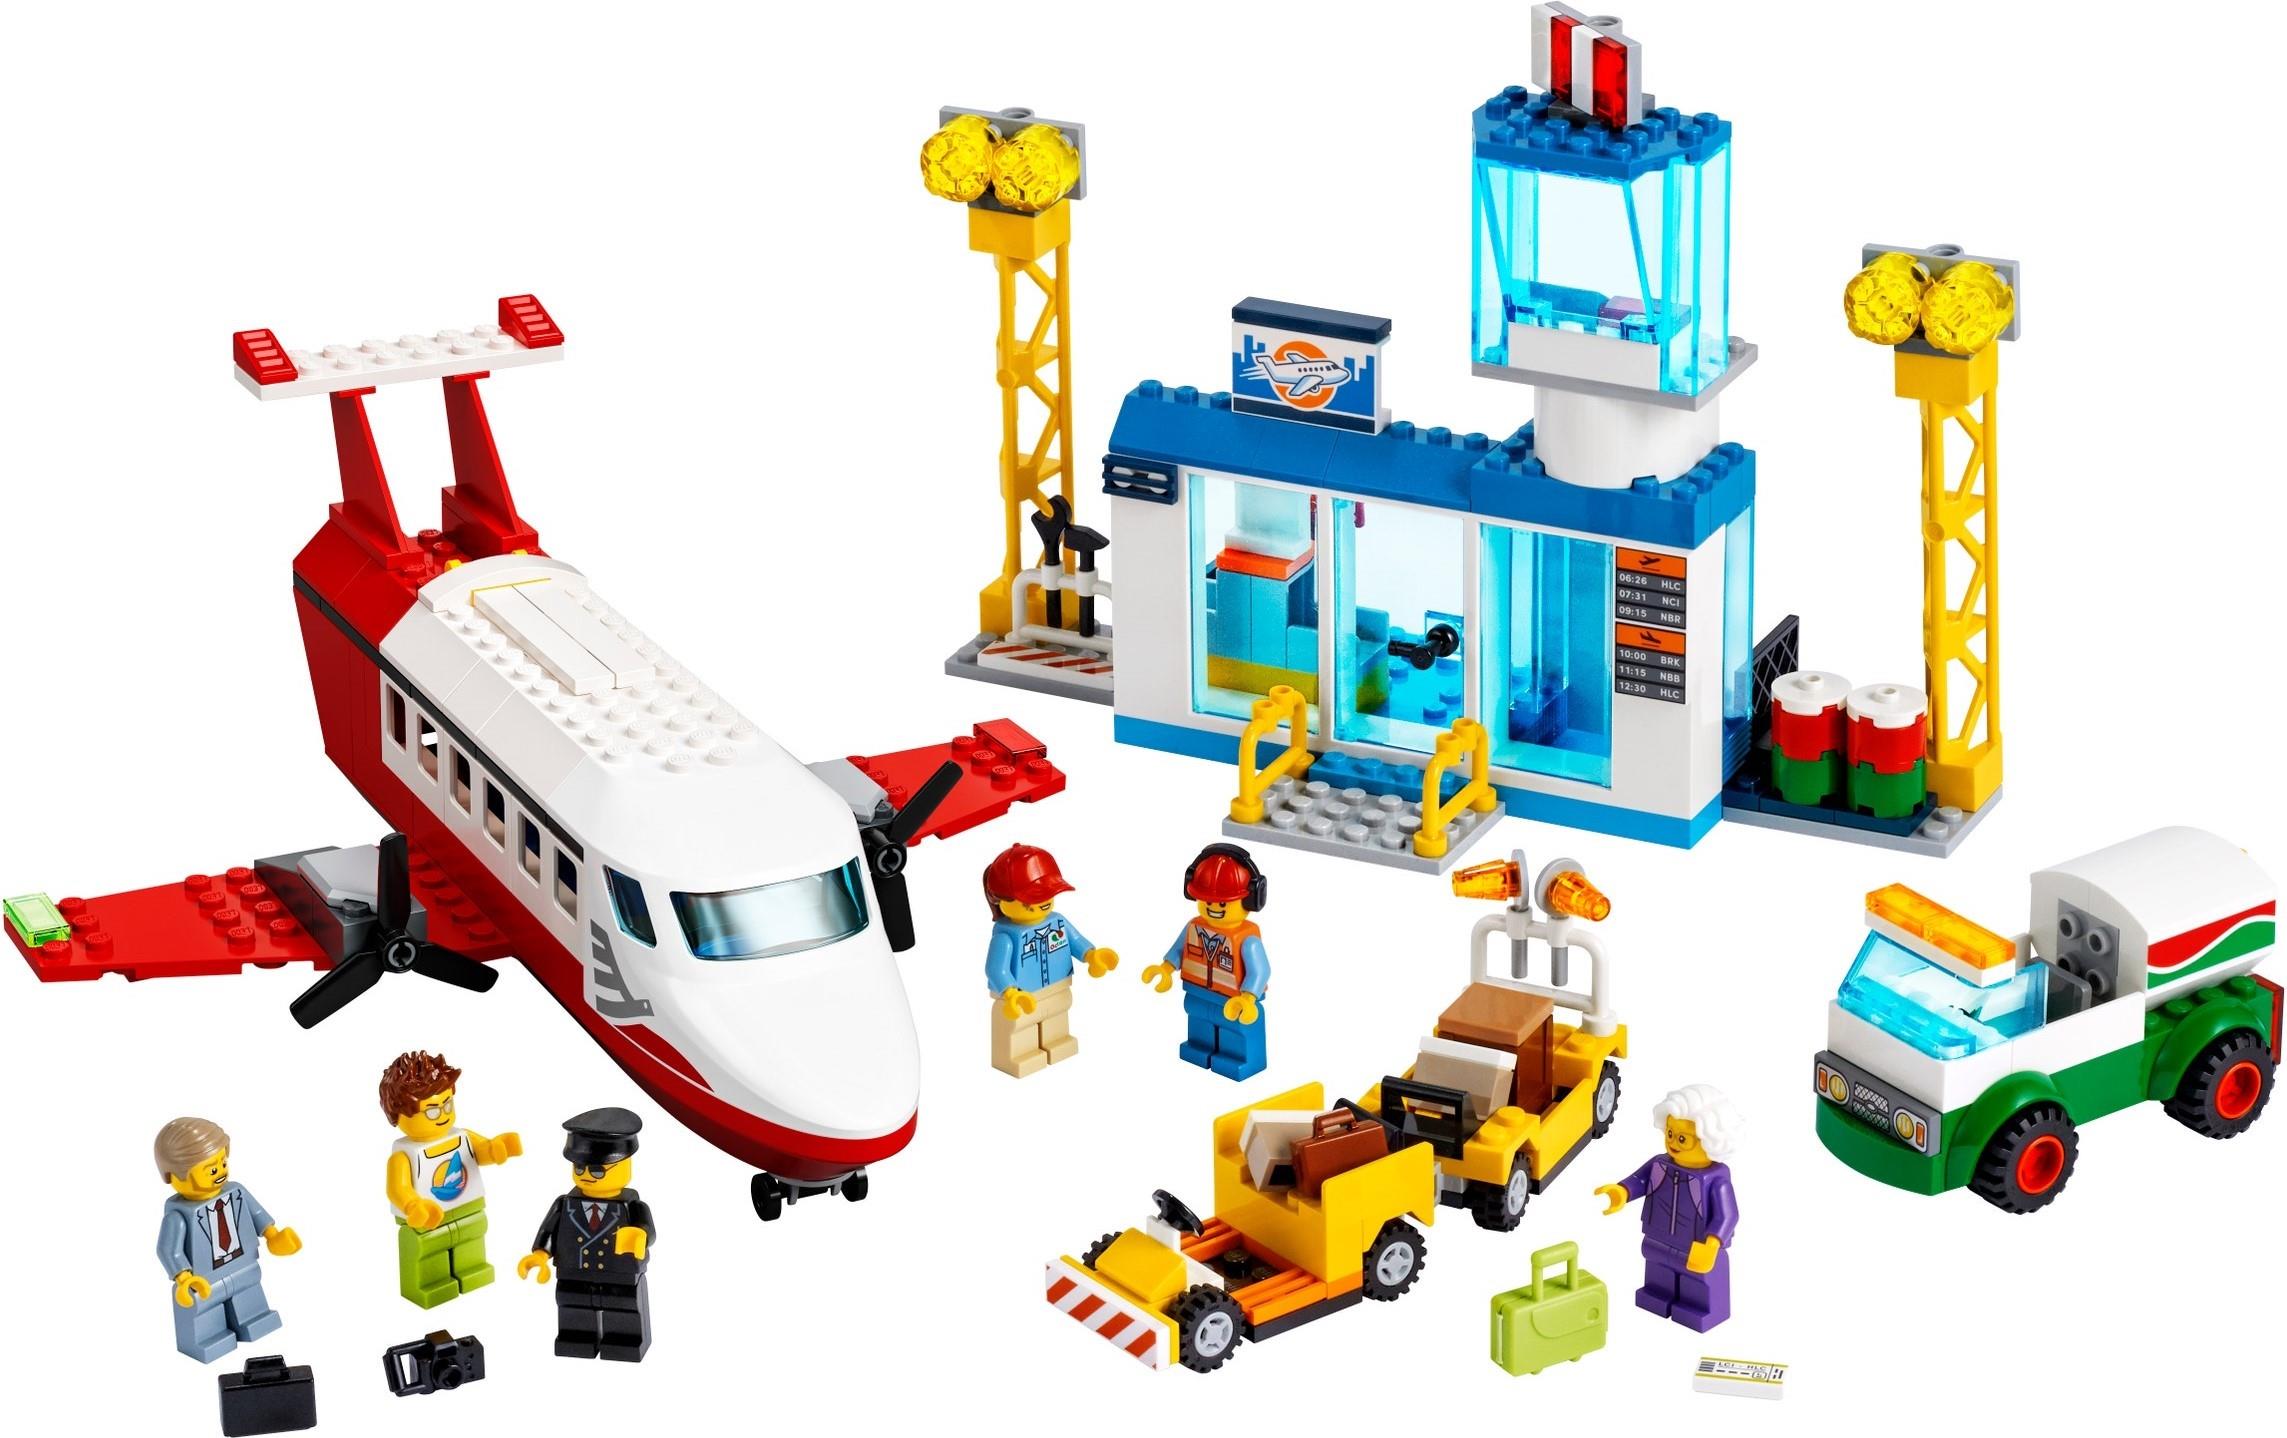 LEGO 60261 City Central | BrickEconomy